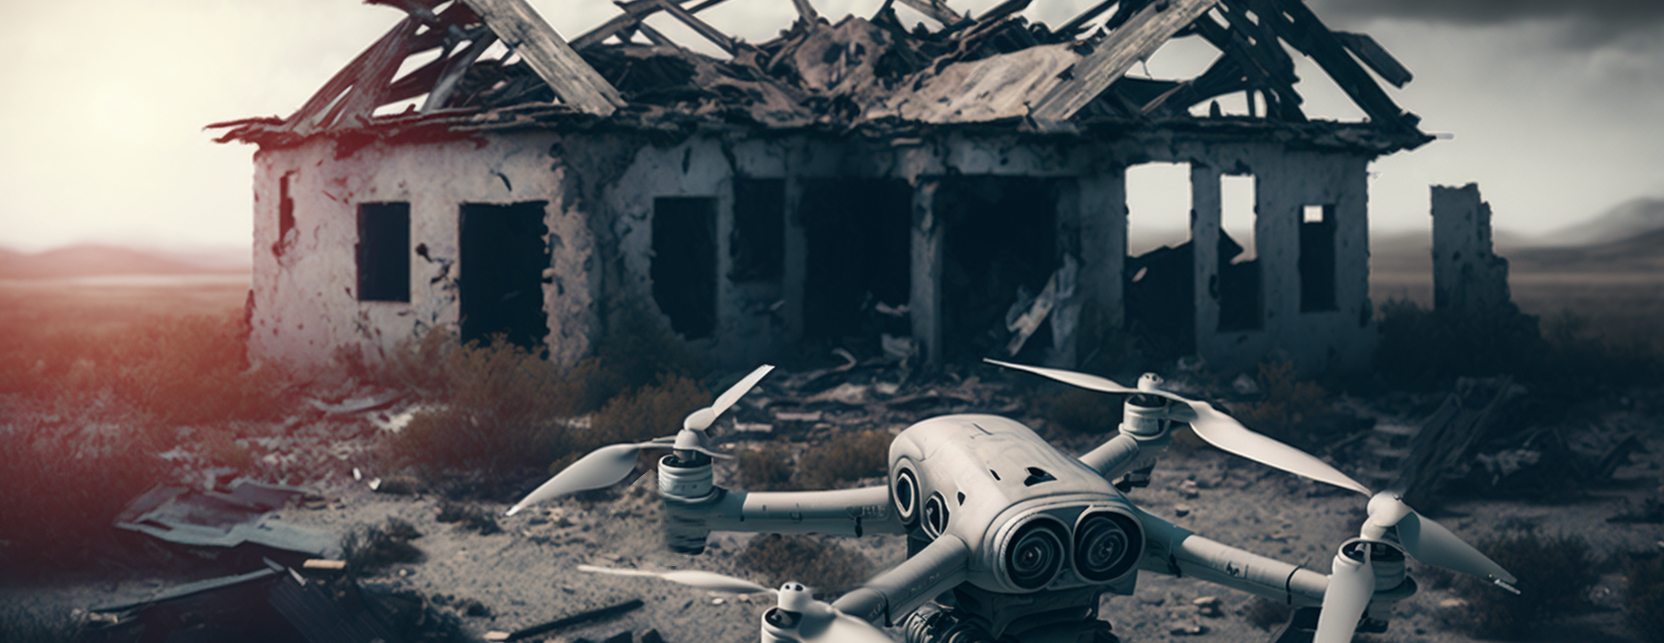 Drohne-Ruine-1